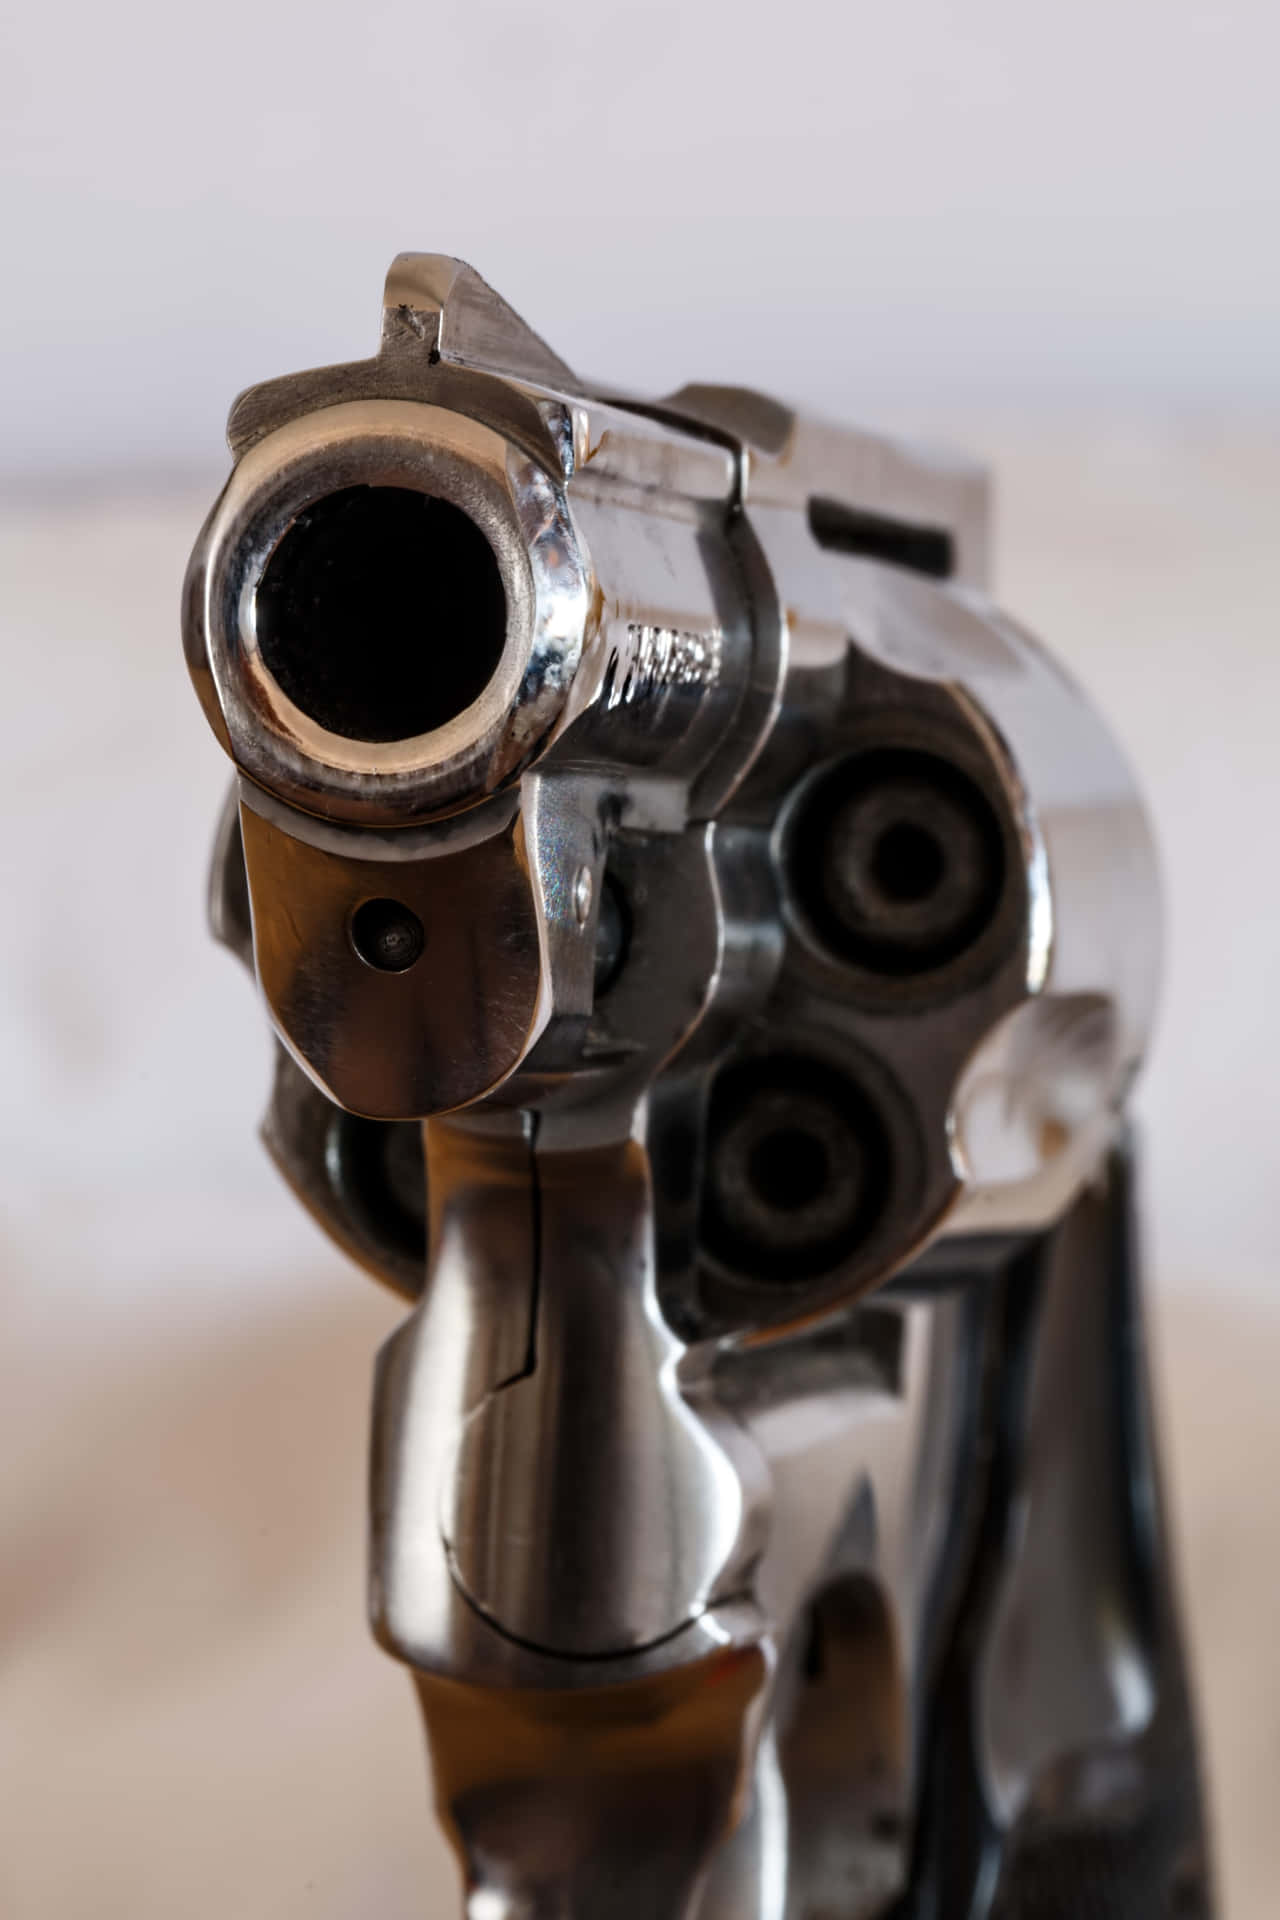 Power and Precision - An Up-Close Look at a Gun